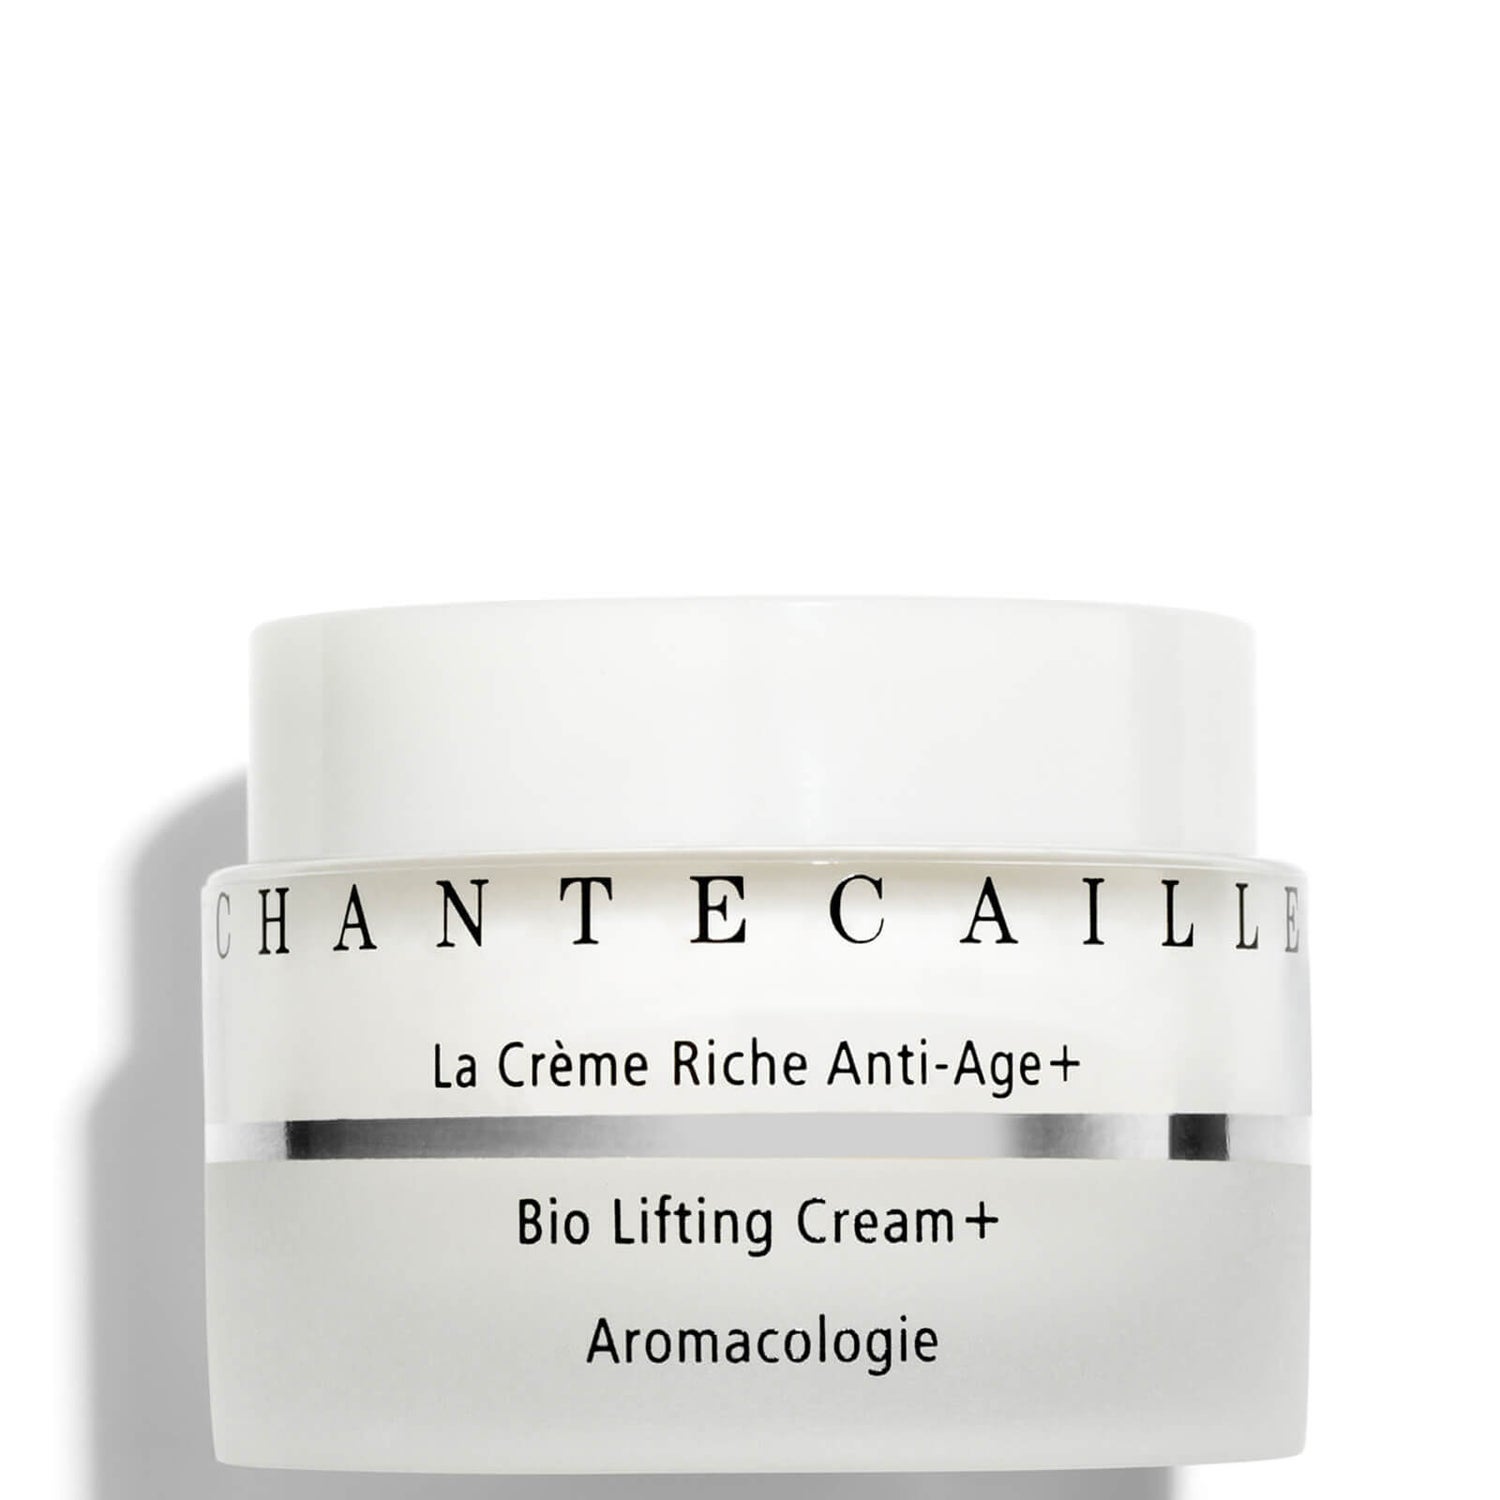 Chantecaille Bio Lifting Cream Plus